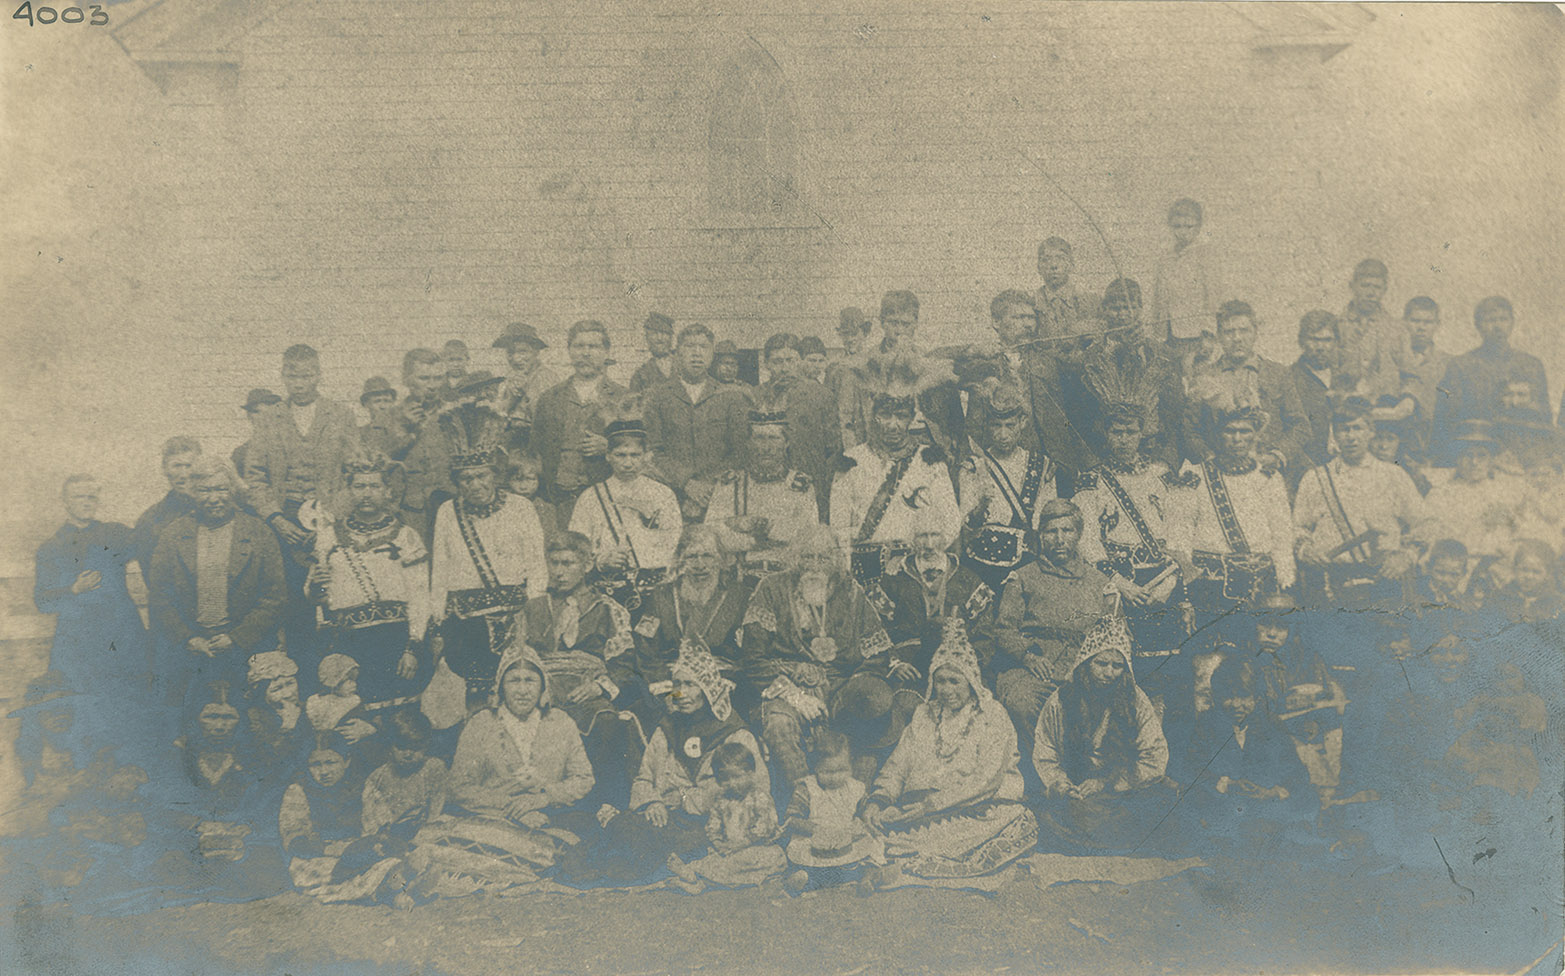 Group photo including Mi'kmaq women, men and children